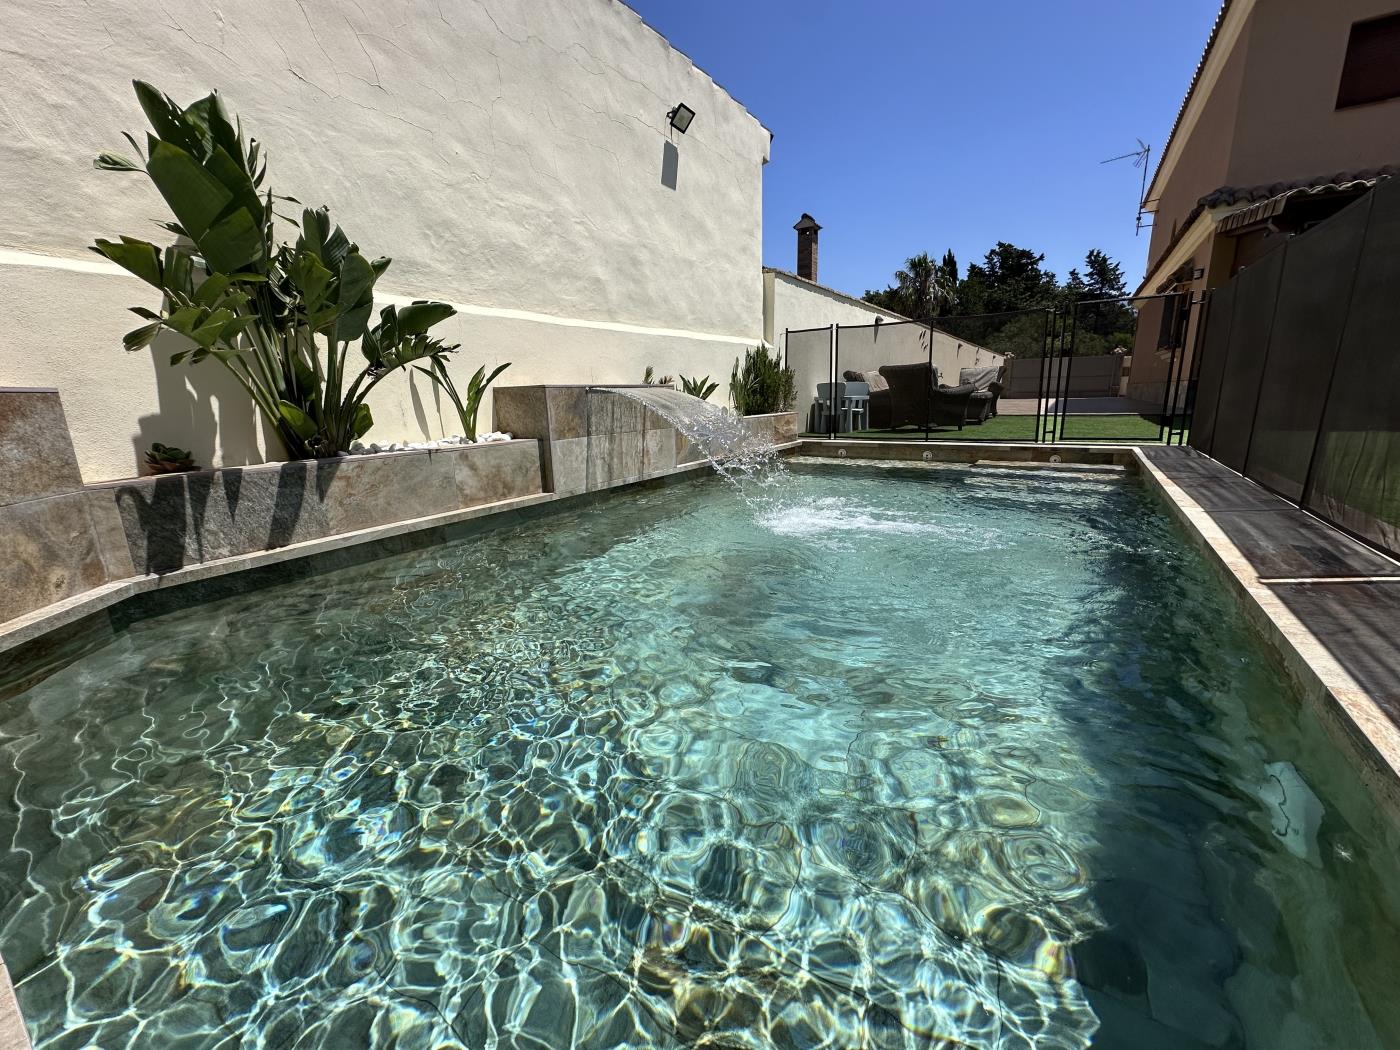 Ref Villa El Olivo. Beautifull and modern Chalet with pool in Chiclana de la frontera